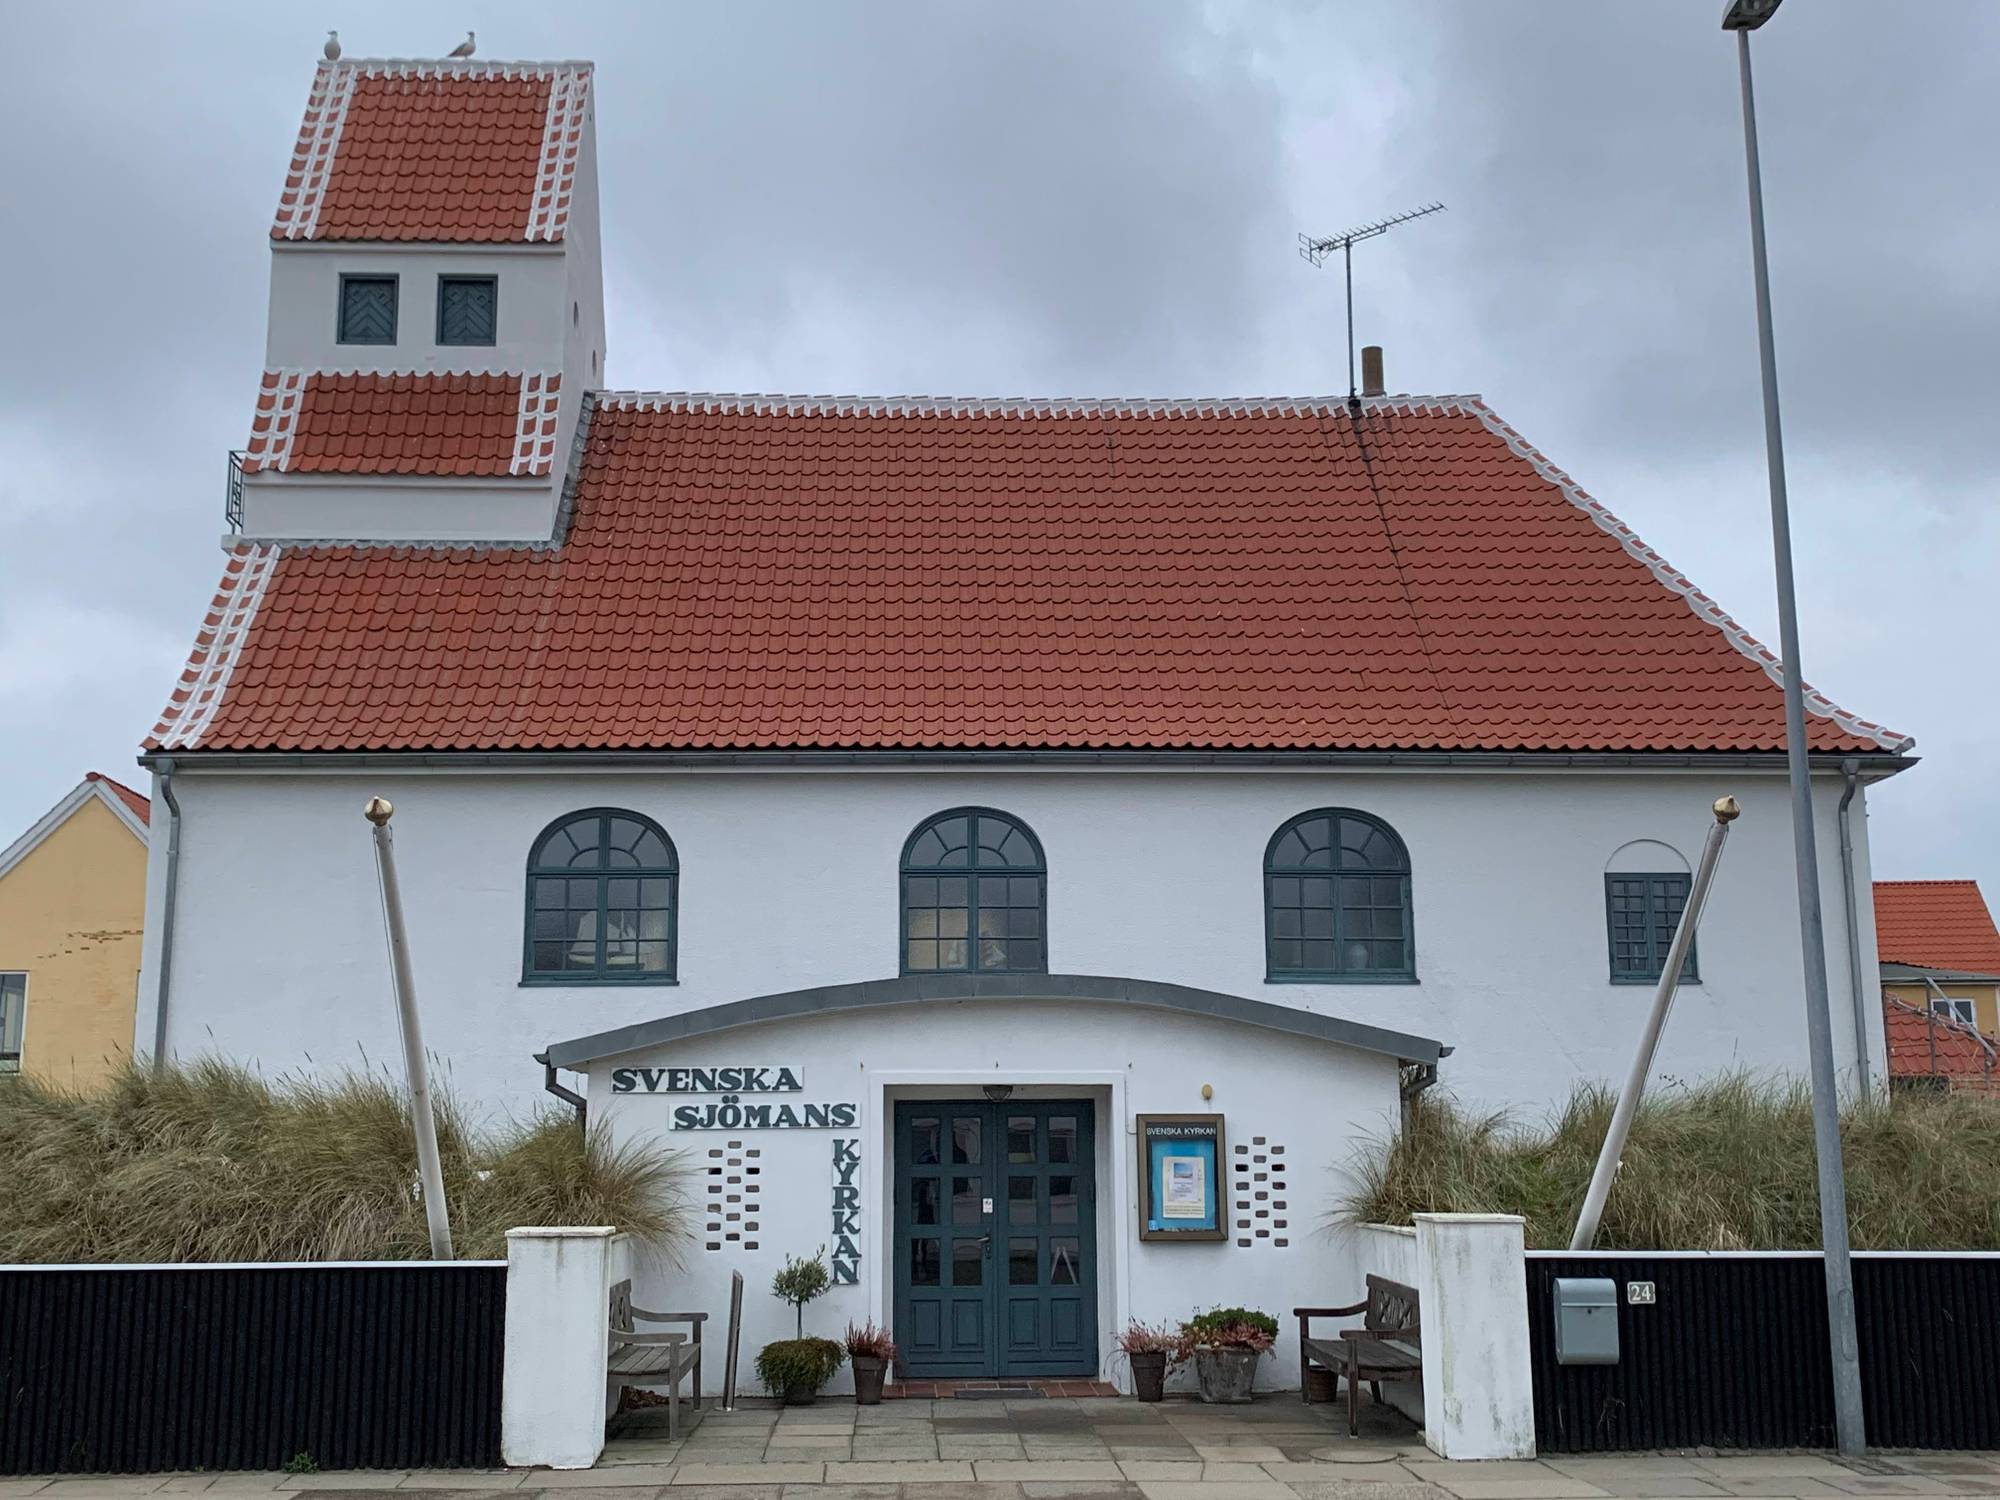 Swedish seamen church in Skagen